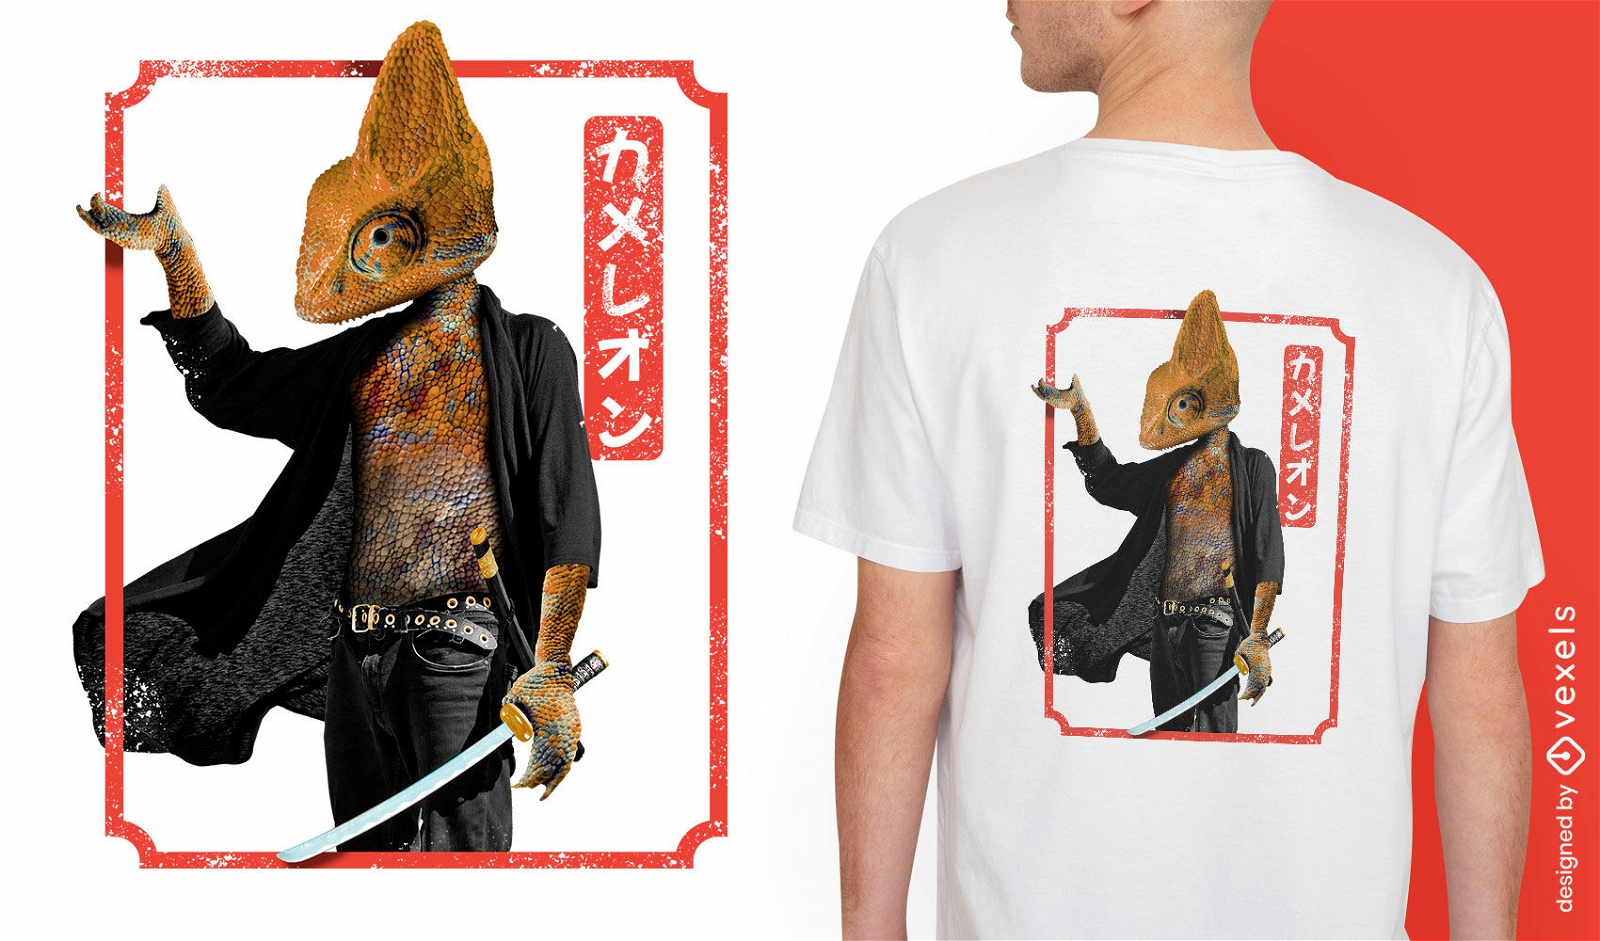 Lizard animal martial arts t-shirt design